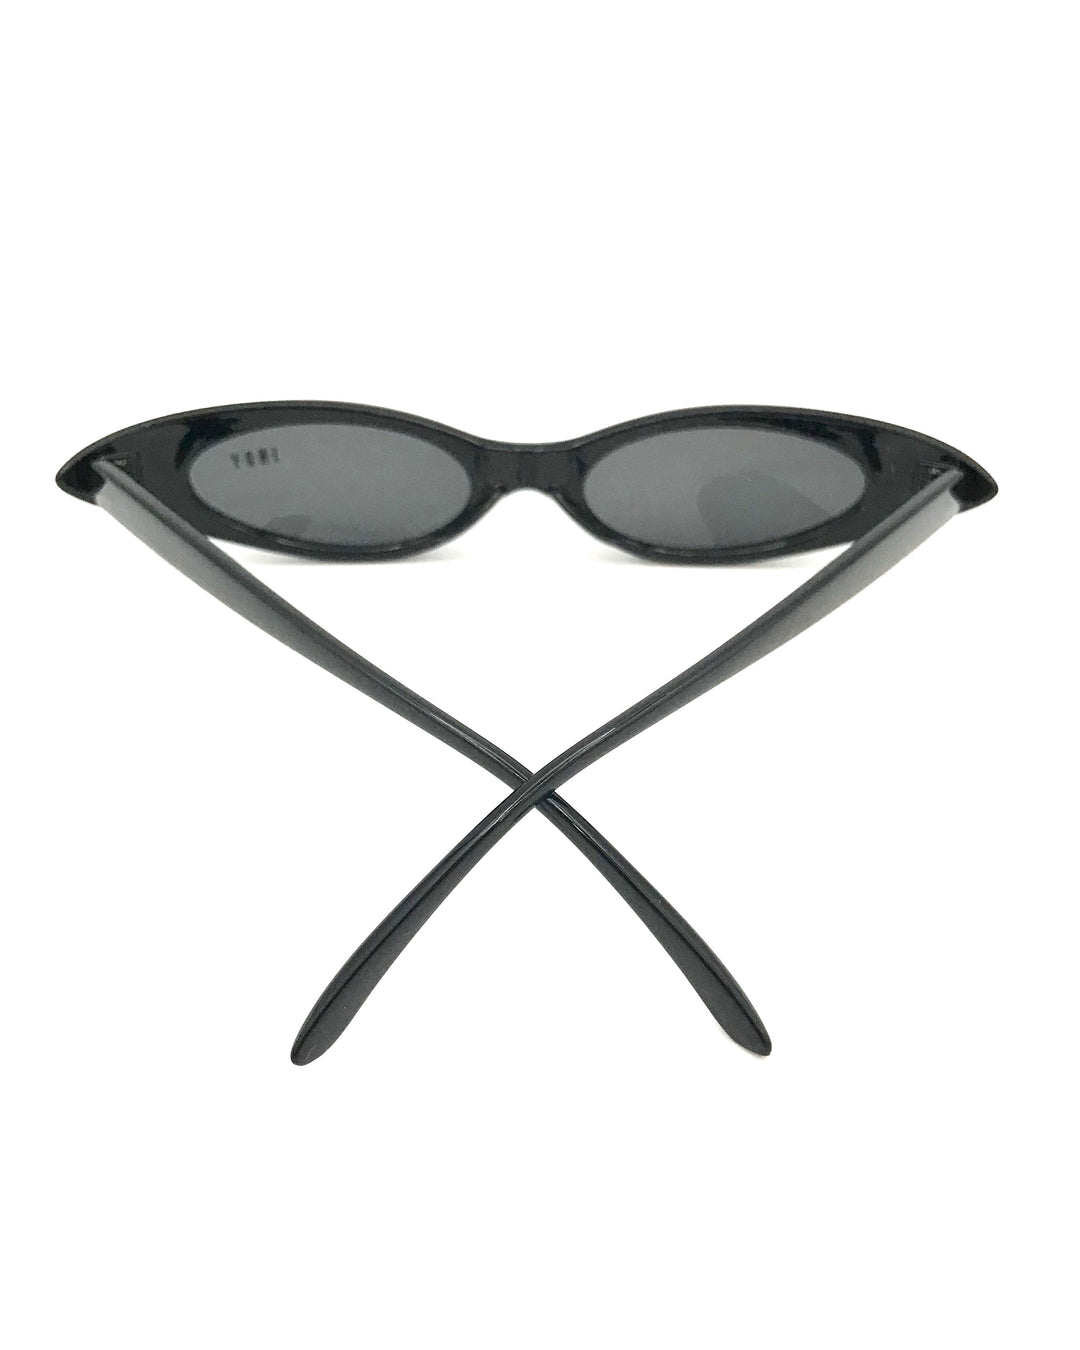 Black Slim Lens Sunglasses